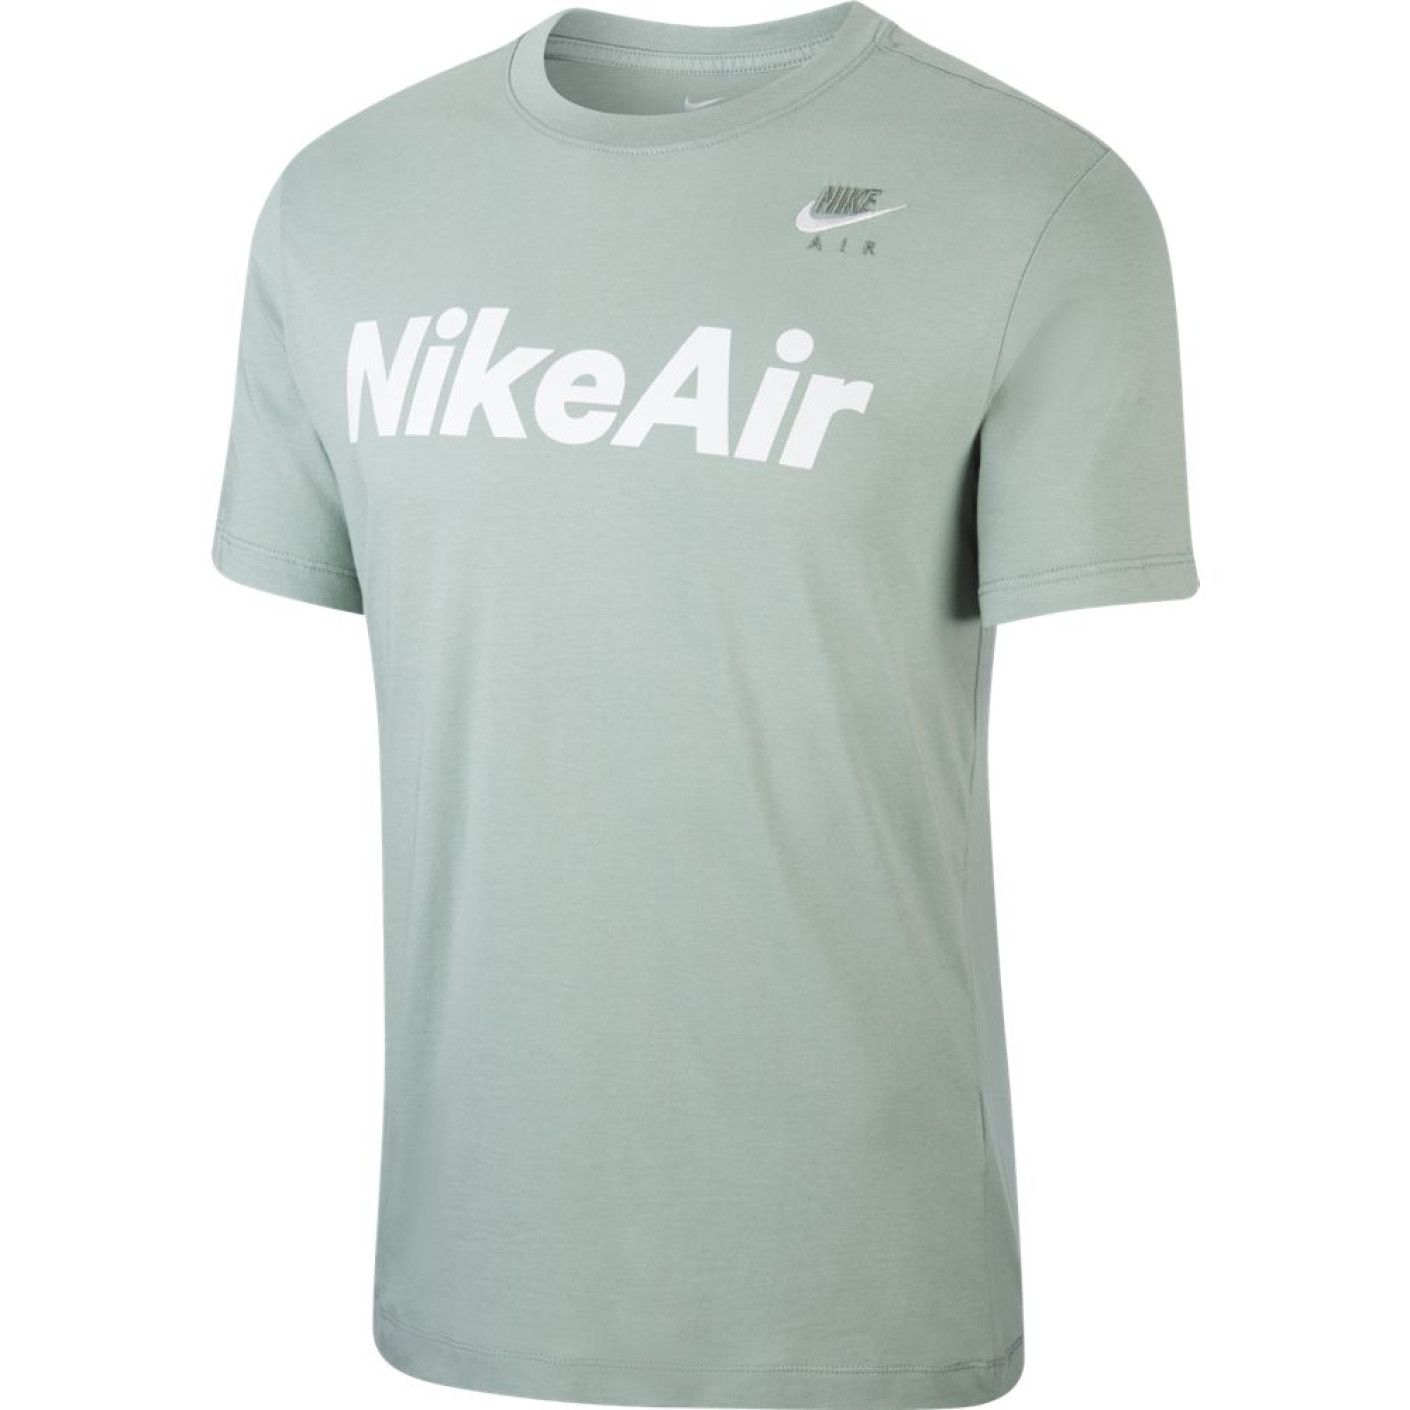 Nike Air T-Shirt Groen Wit